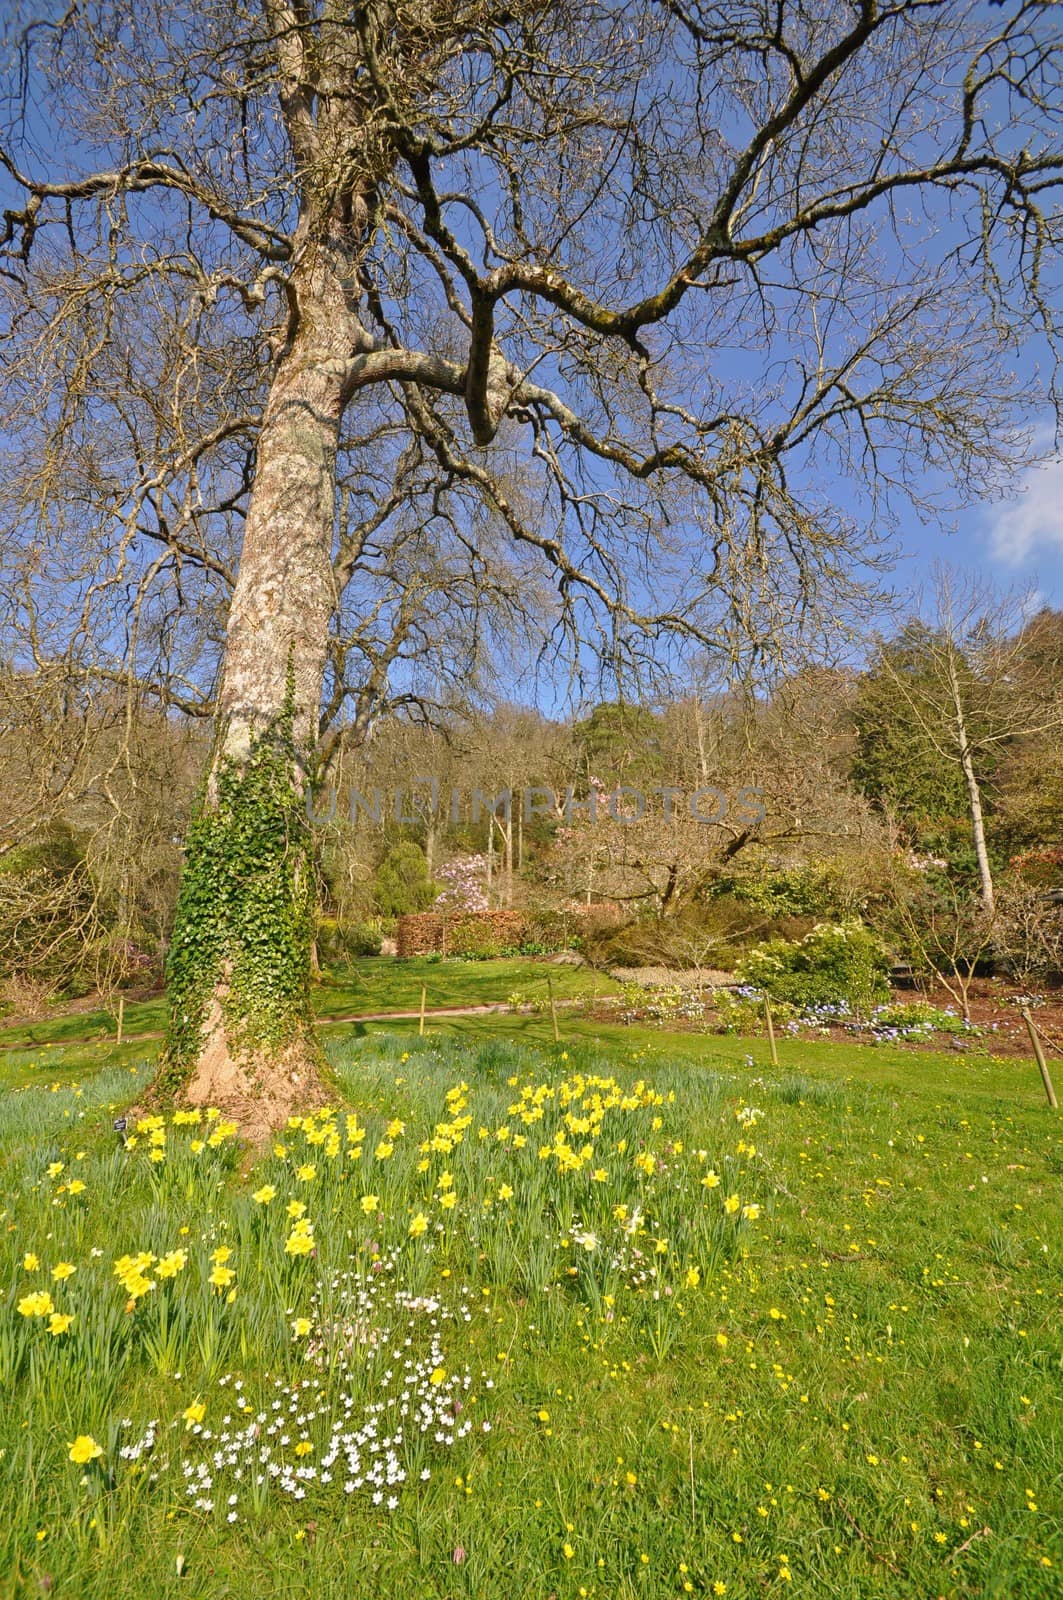 Daffodil meadow by dpe123